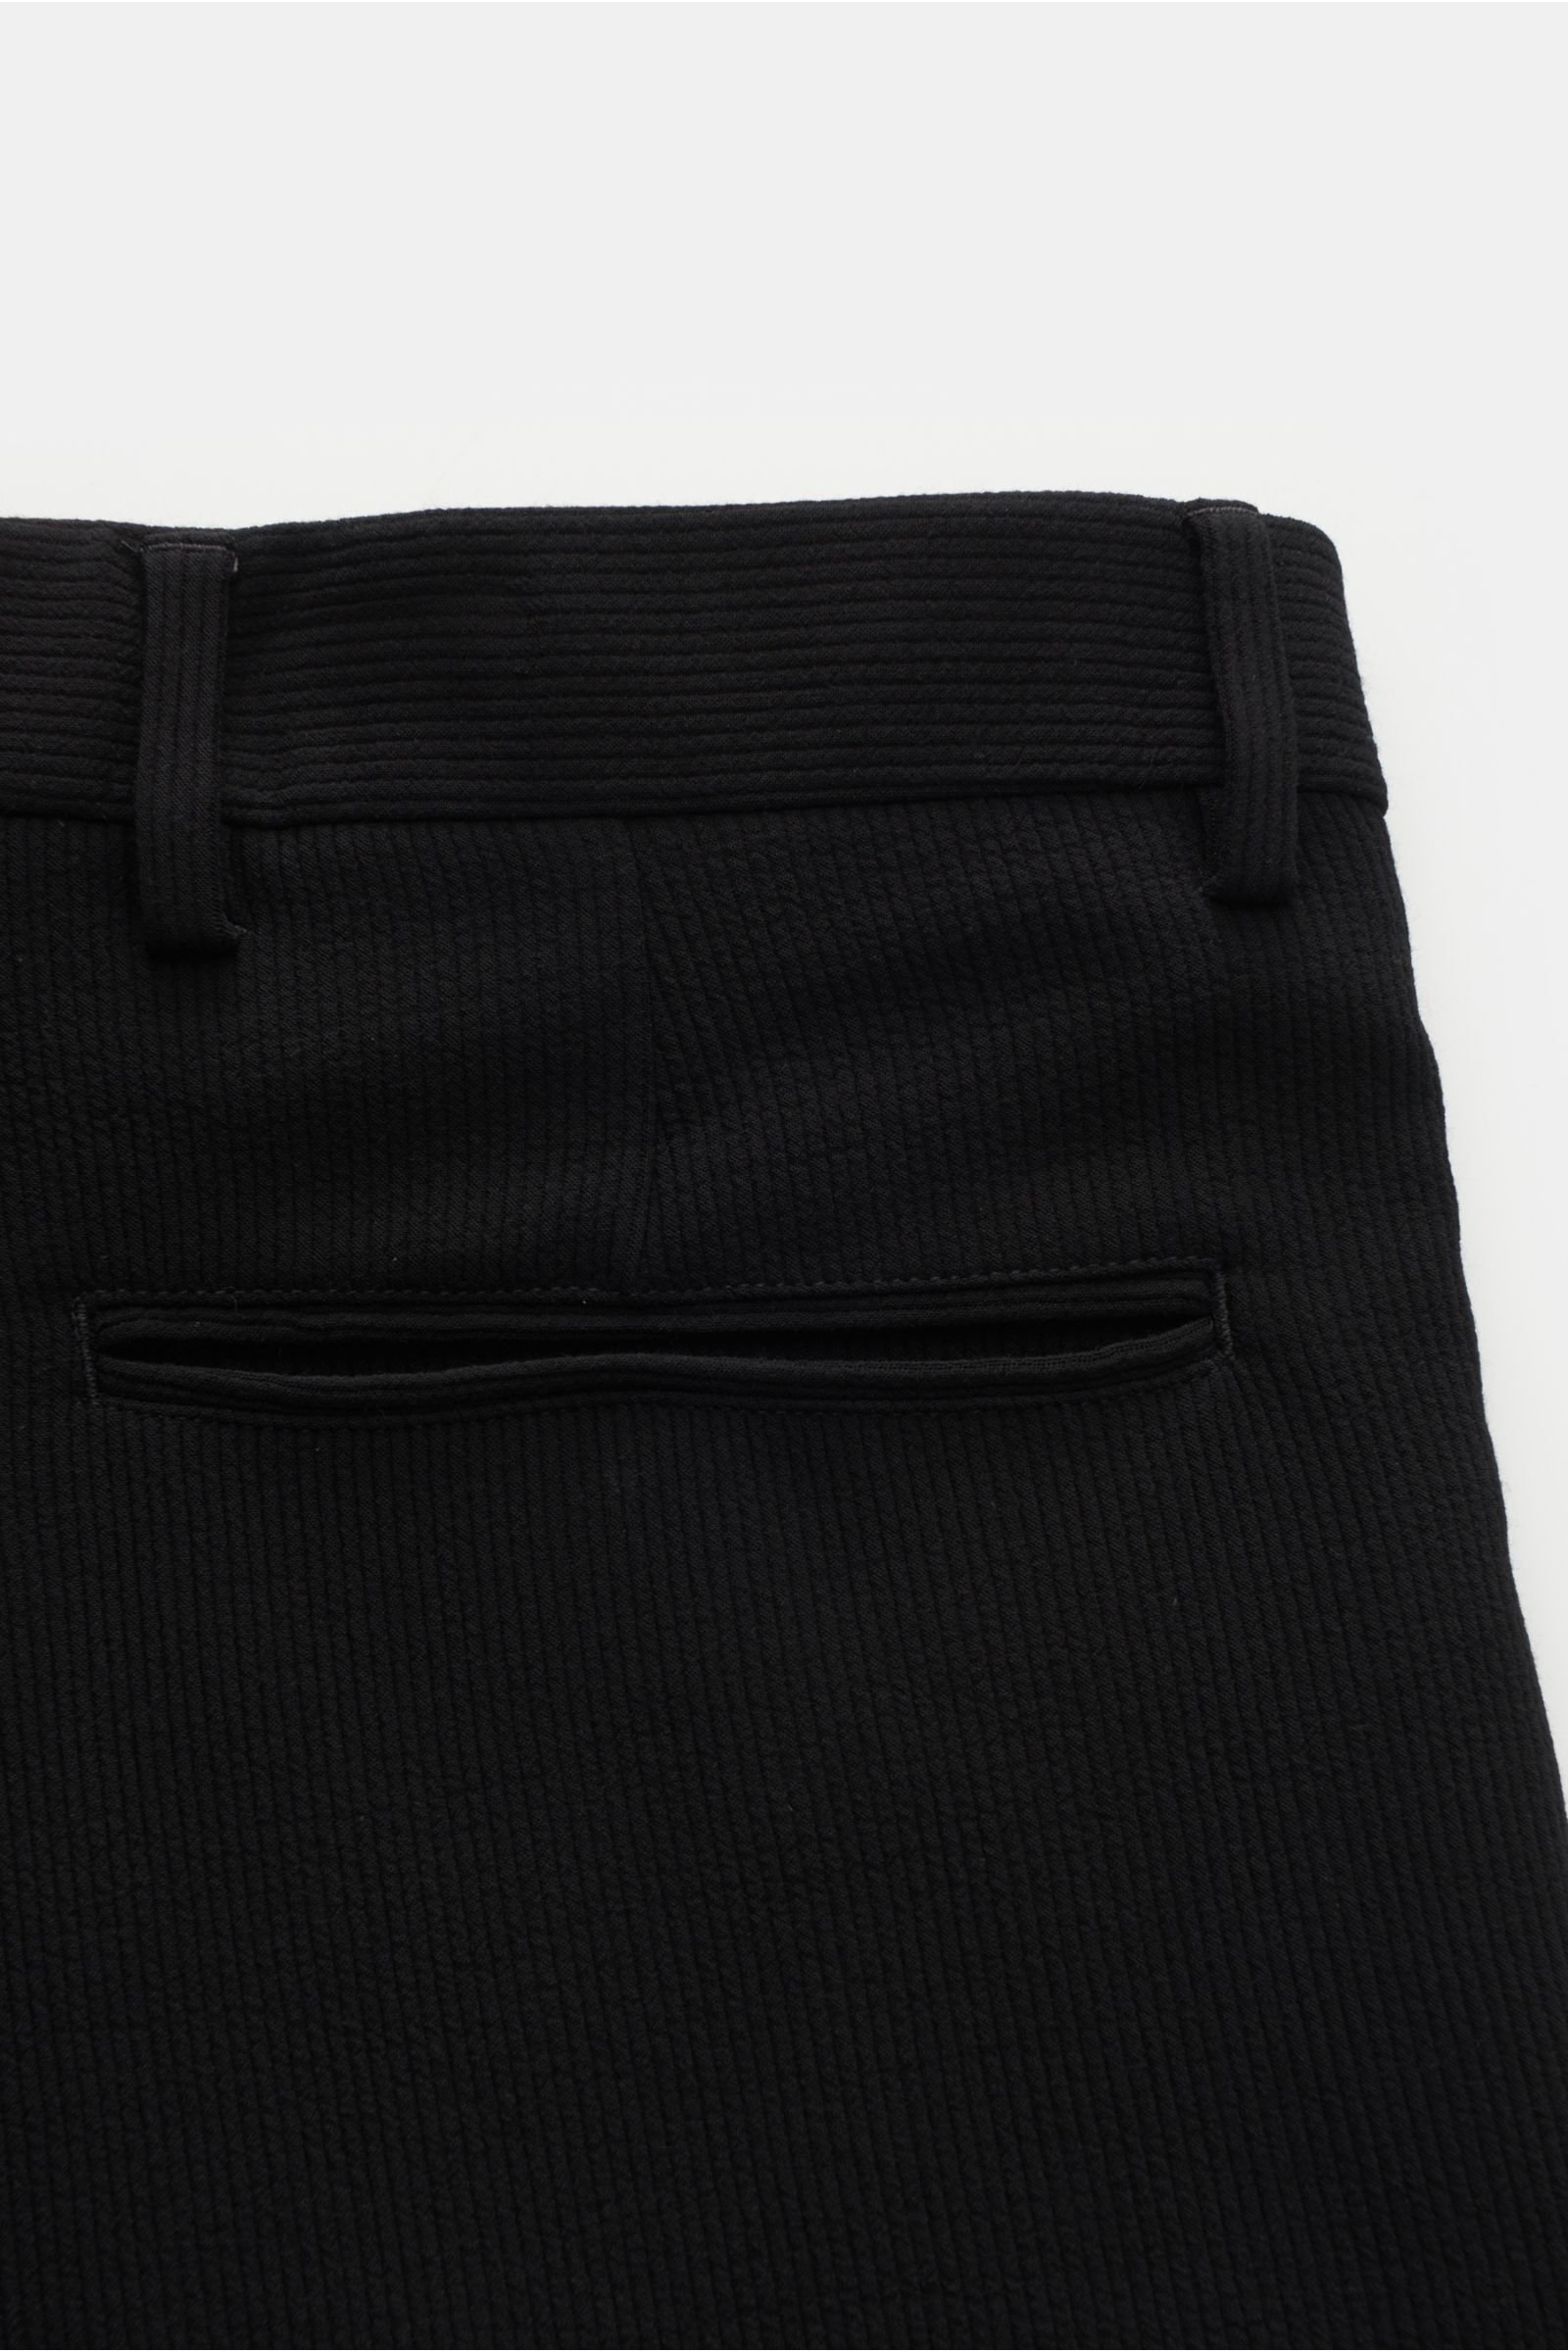 Trousers Shorts Giorgio Armani - Mud viscose blend pants - 3SGPP0VST003NU8V6-demhanvico.com.vn